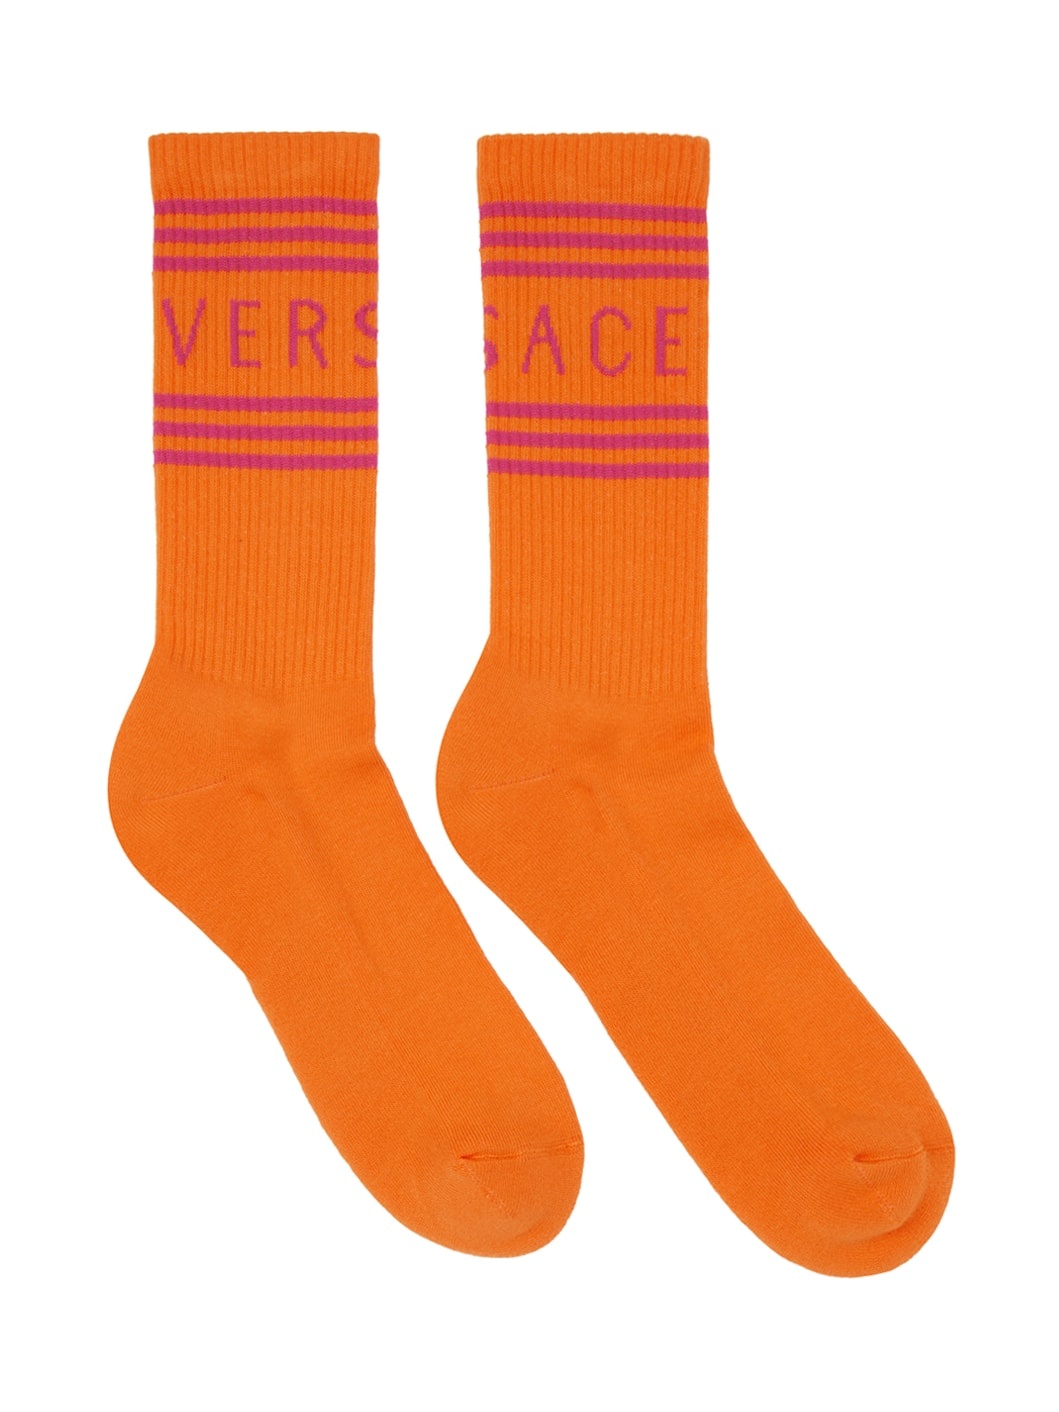 Orange Athletic Socks - 1